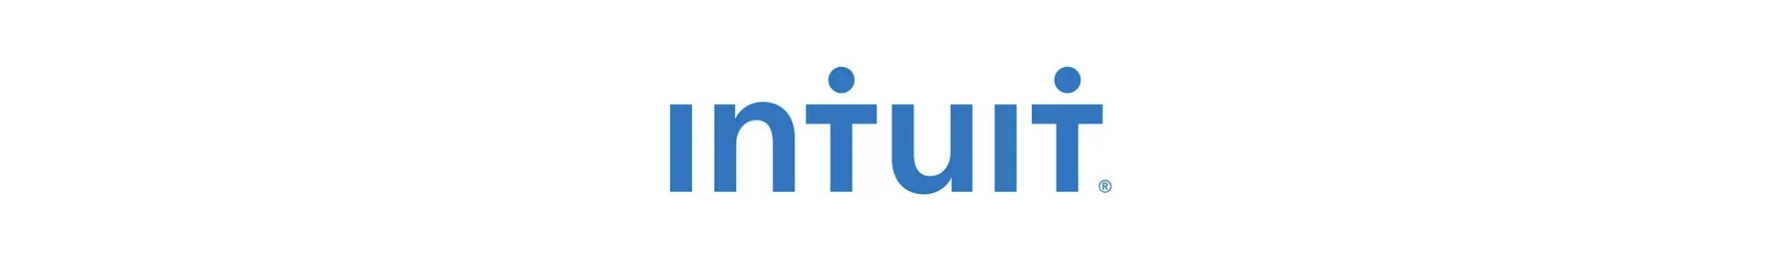 Intuit logo